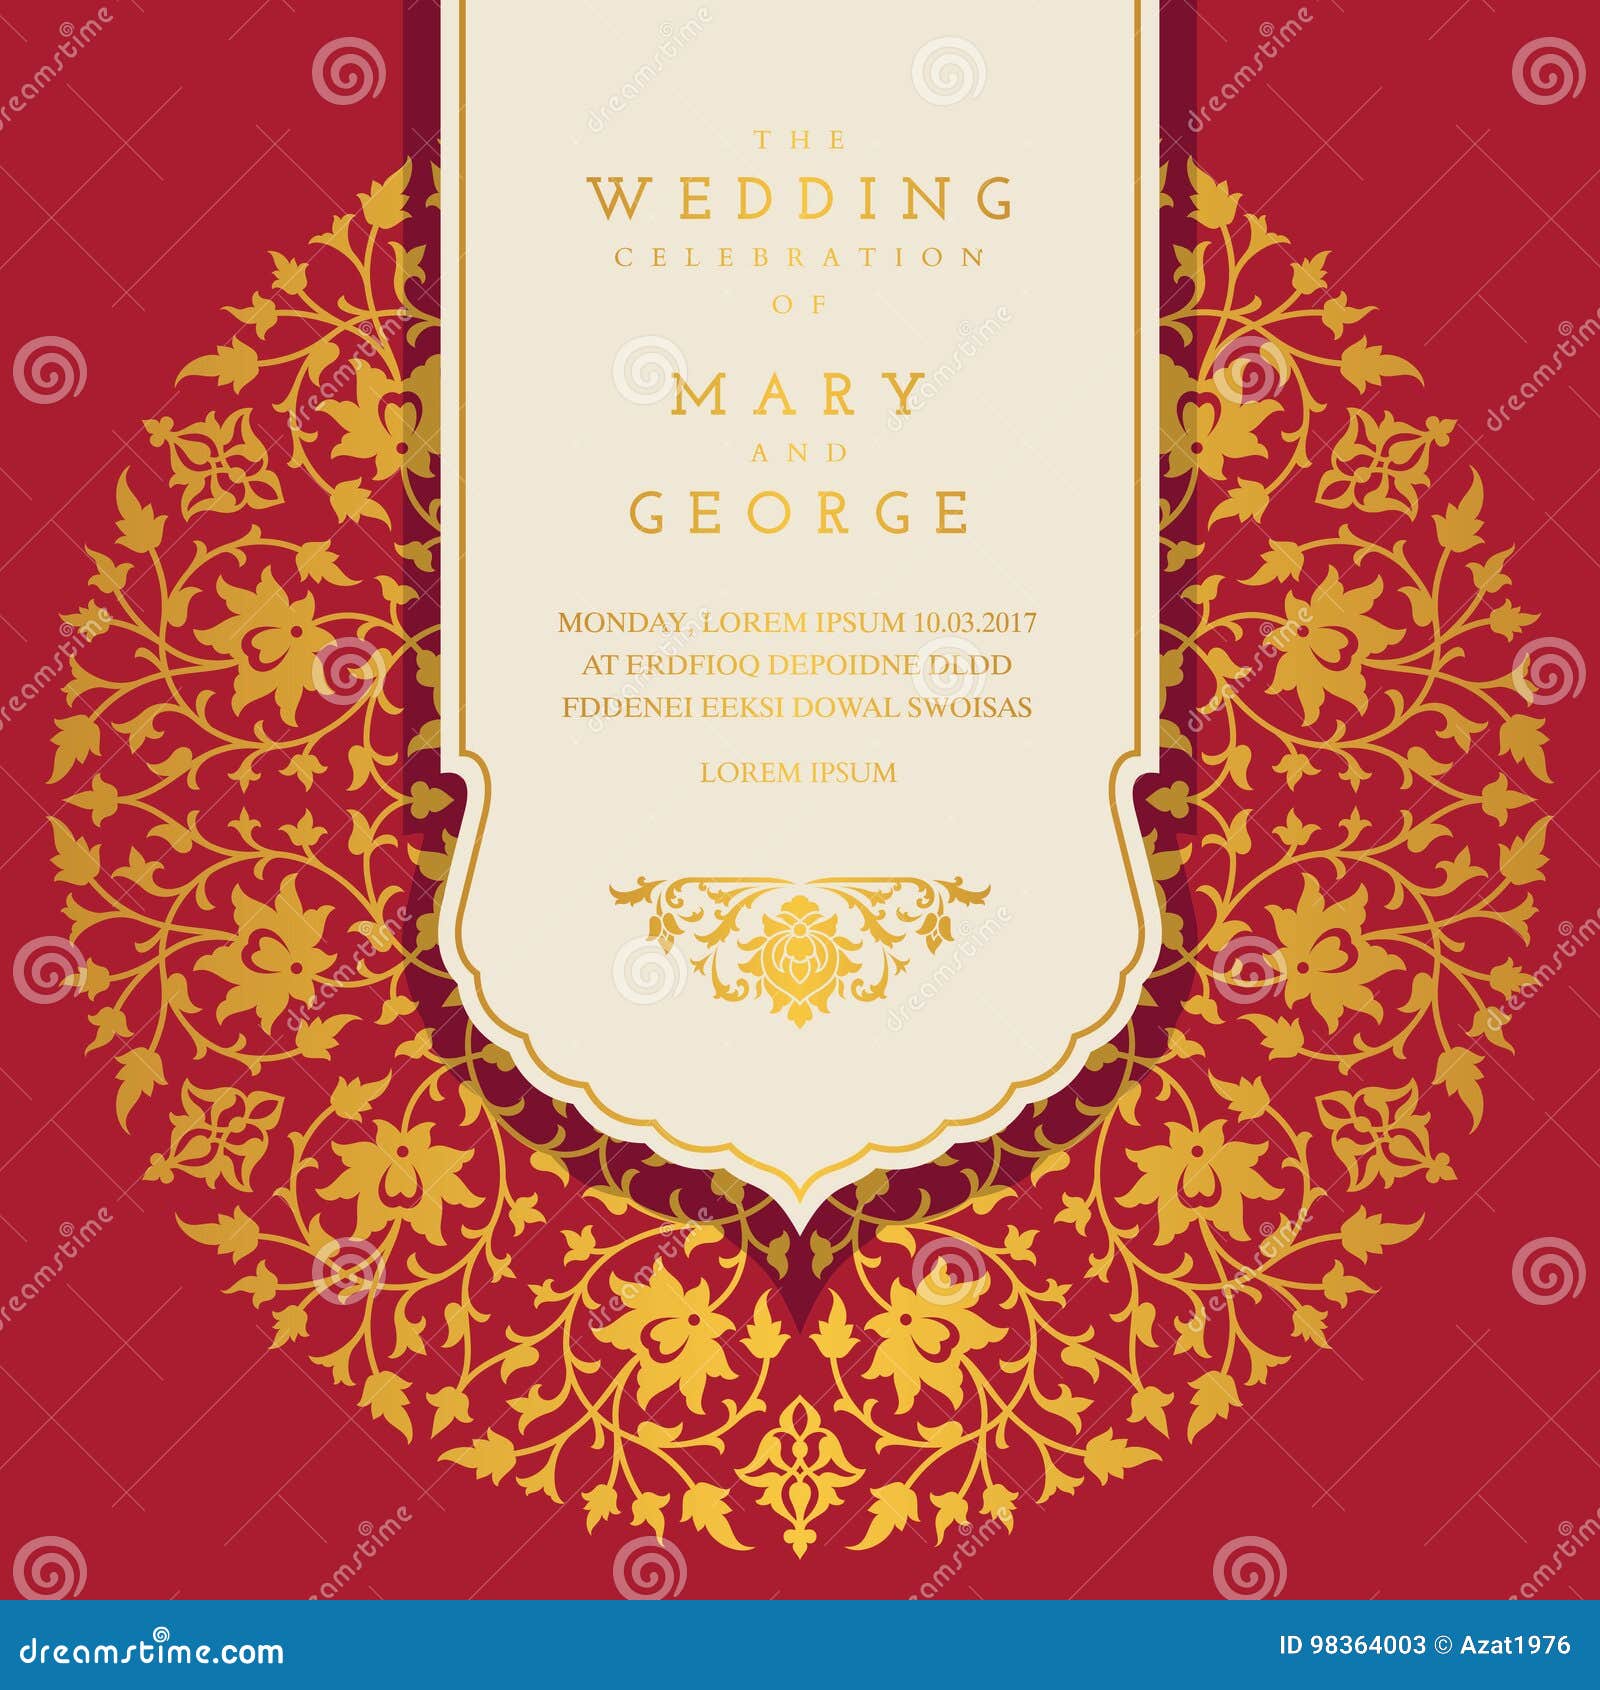 7984 Wedding Invitation Background Illustrations  Clip Art  iStock  Wedding  invitation design Wedding card Wedding reception